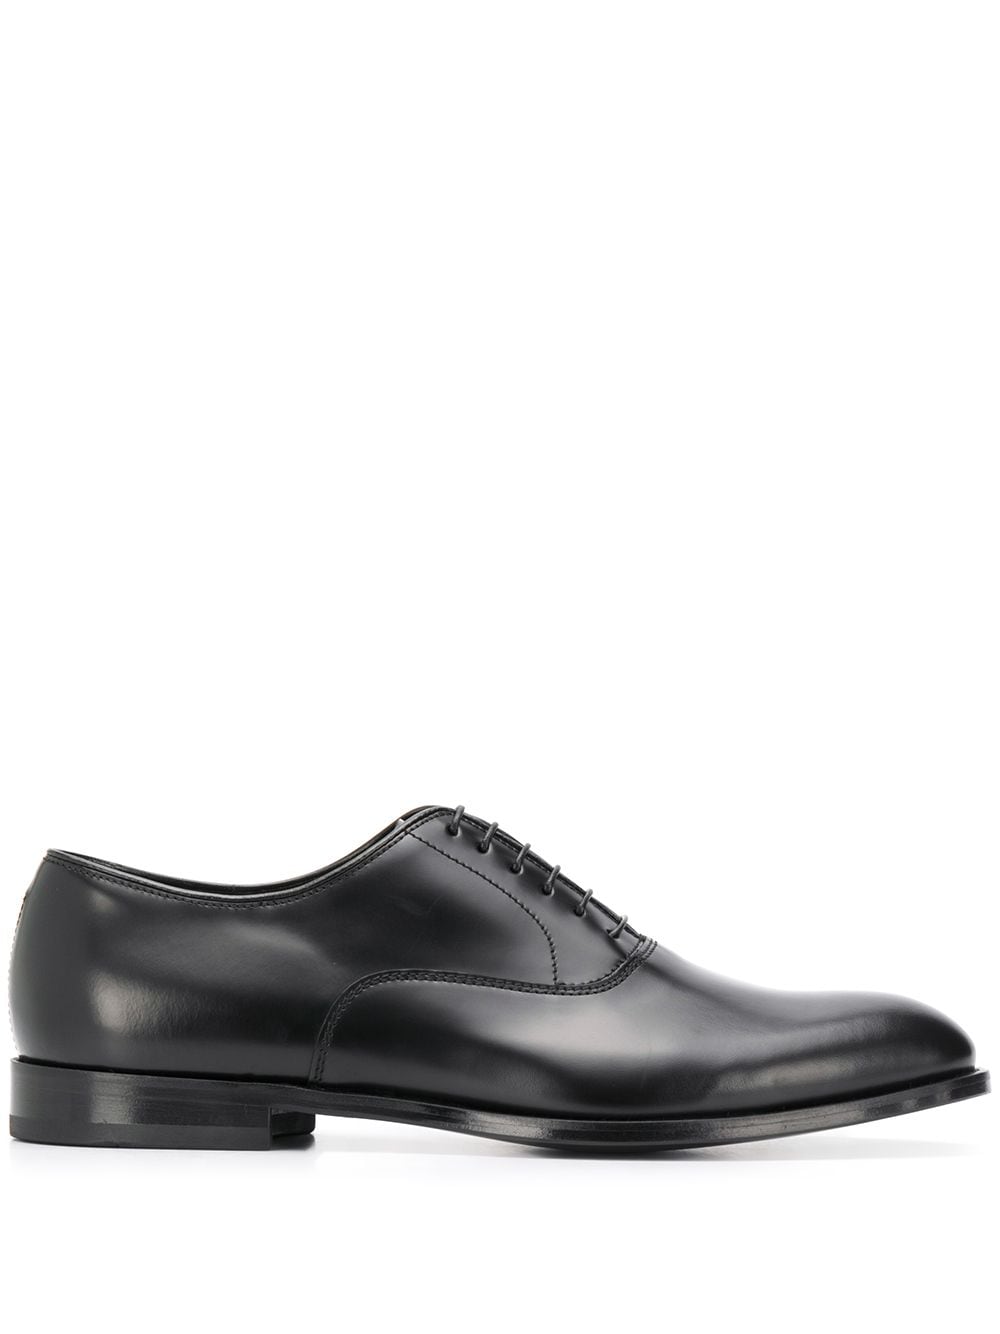 Doucal's York Oxford shoes - Black von Doucal's